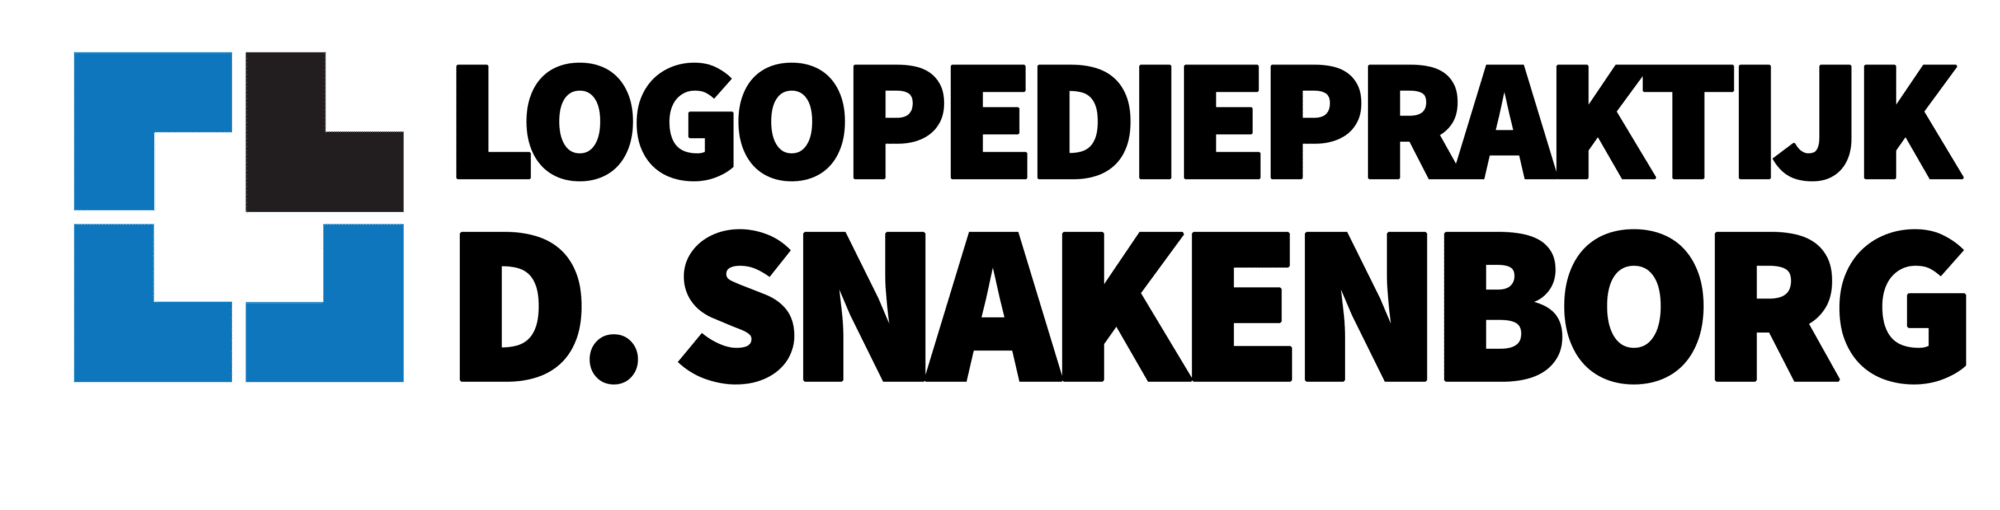 Prompt - Logopediepraktijk Snakenborg